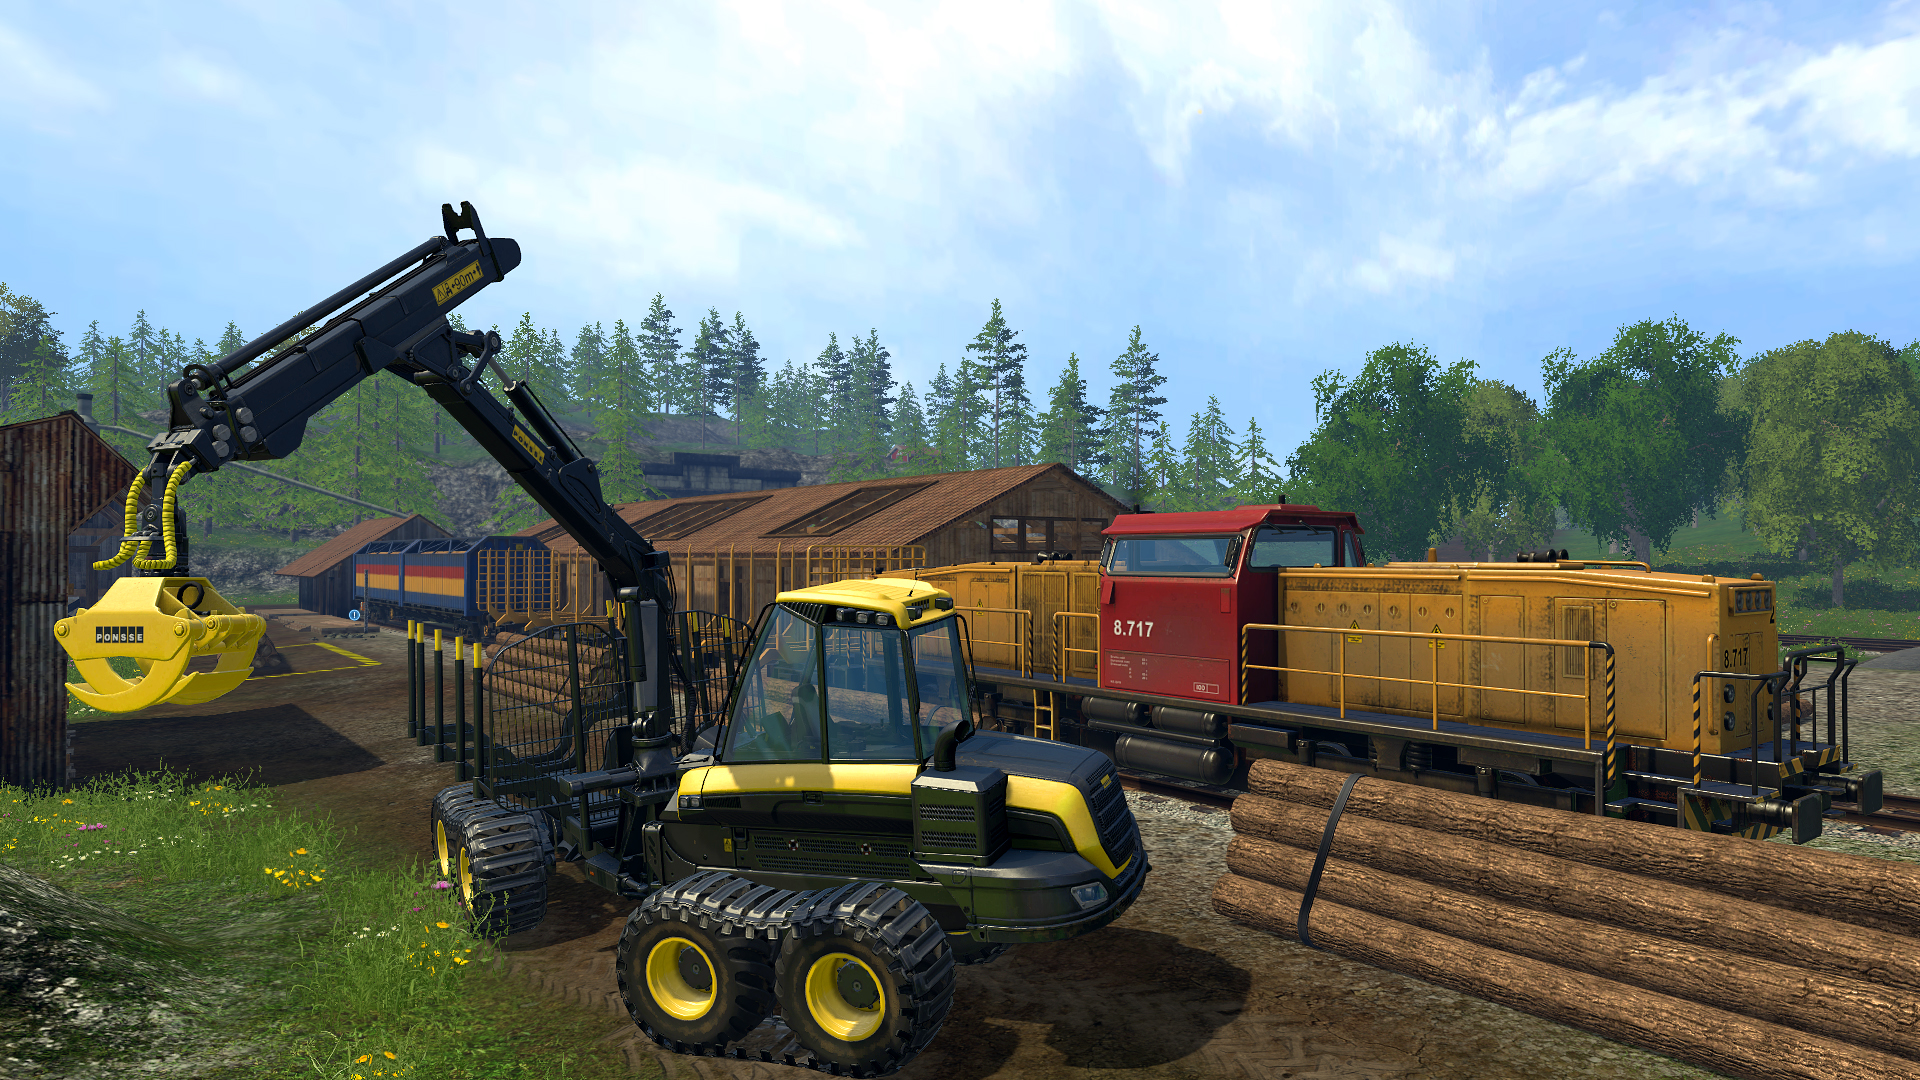 Save 35% on Farming Simulator 15 on Steam